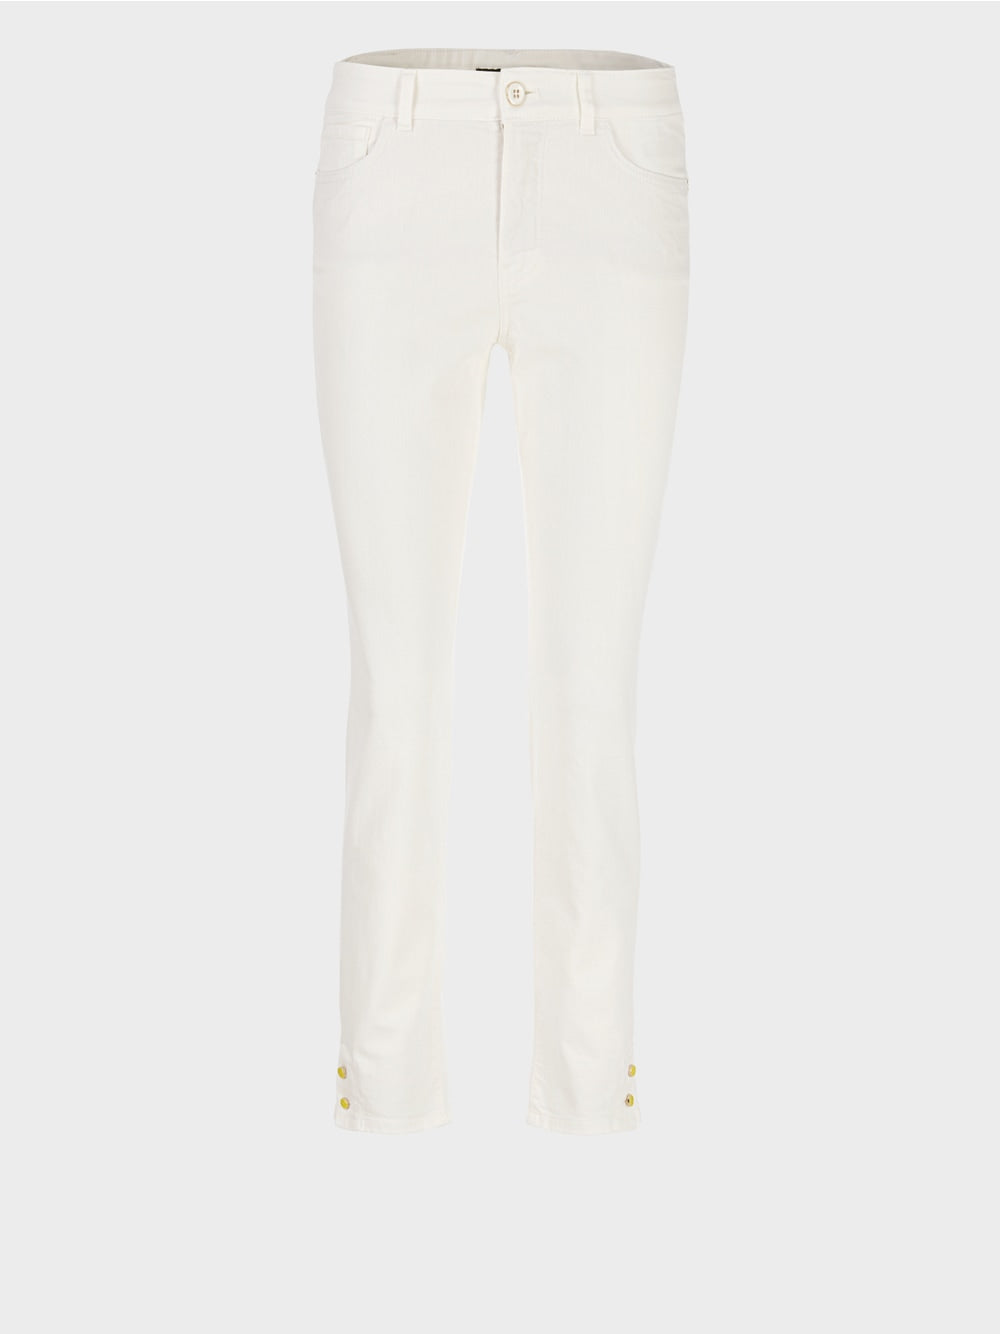 off-white slim fit pants